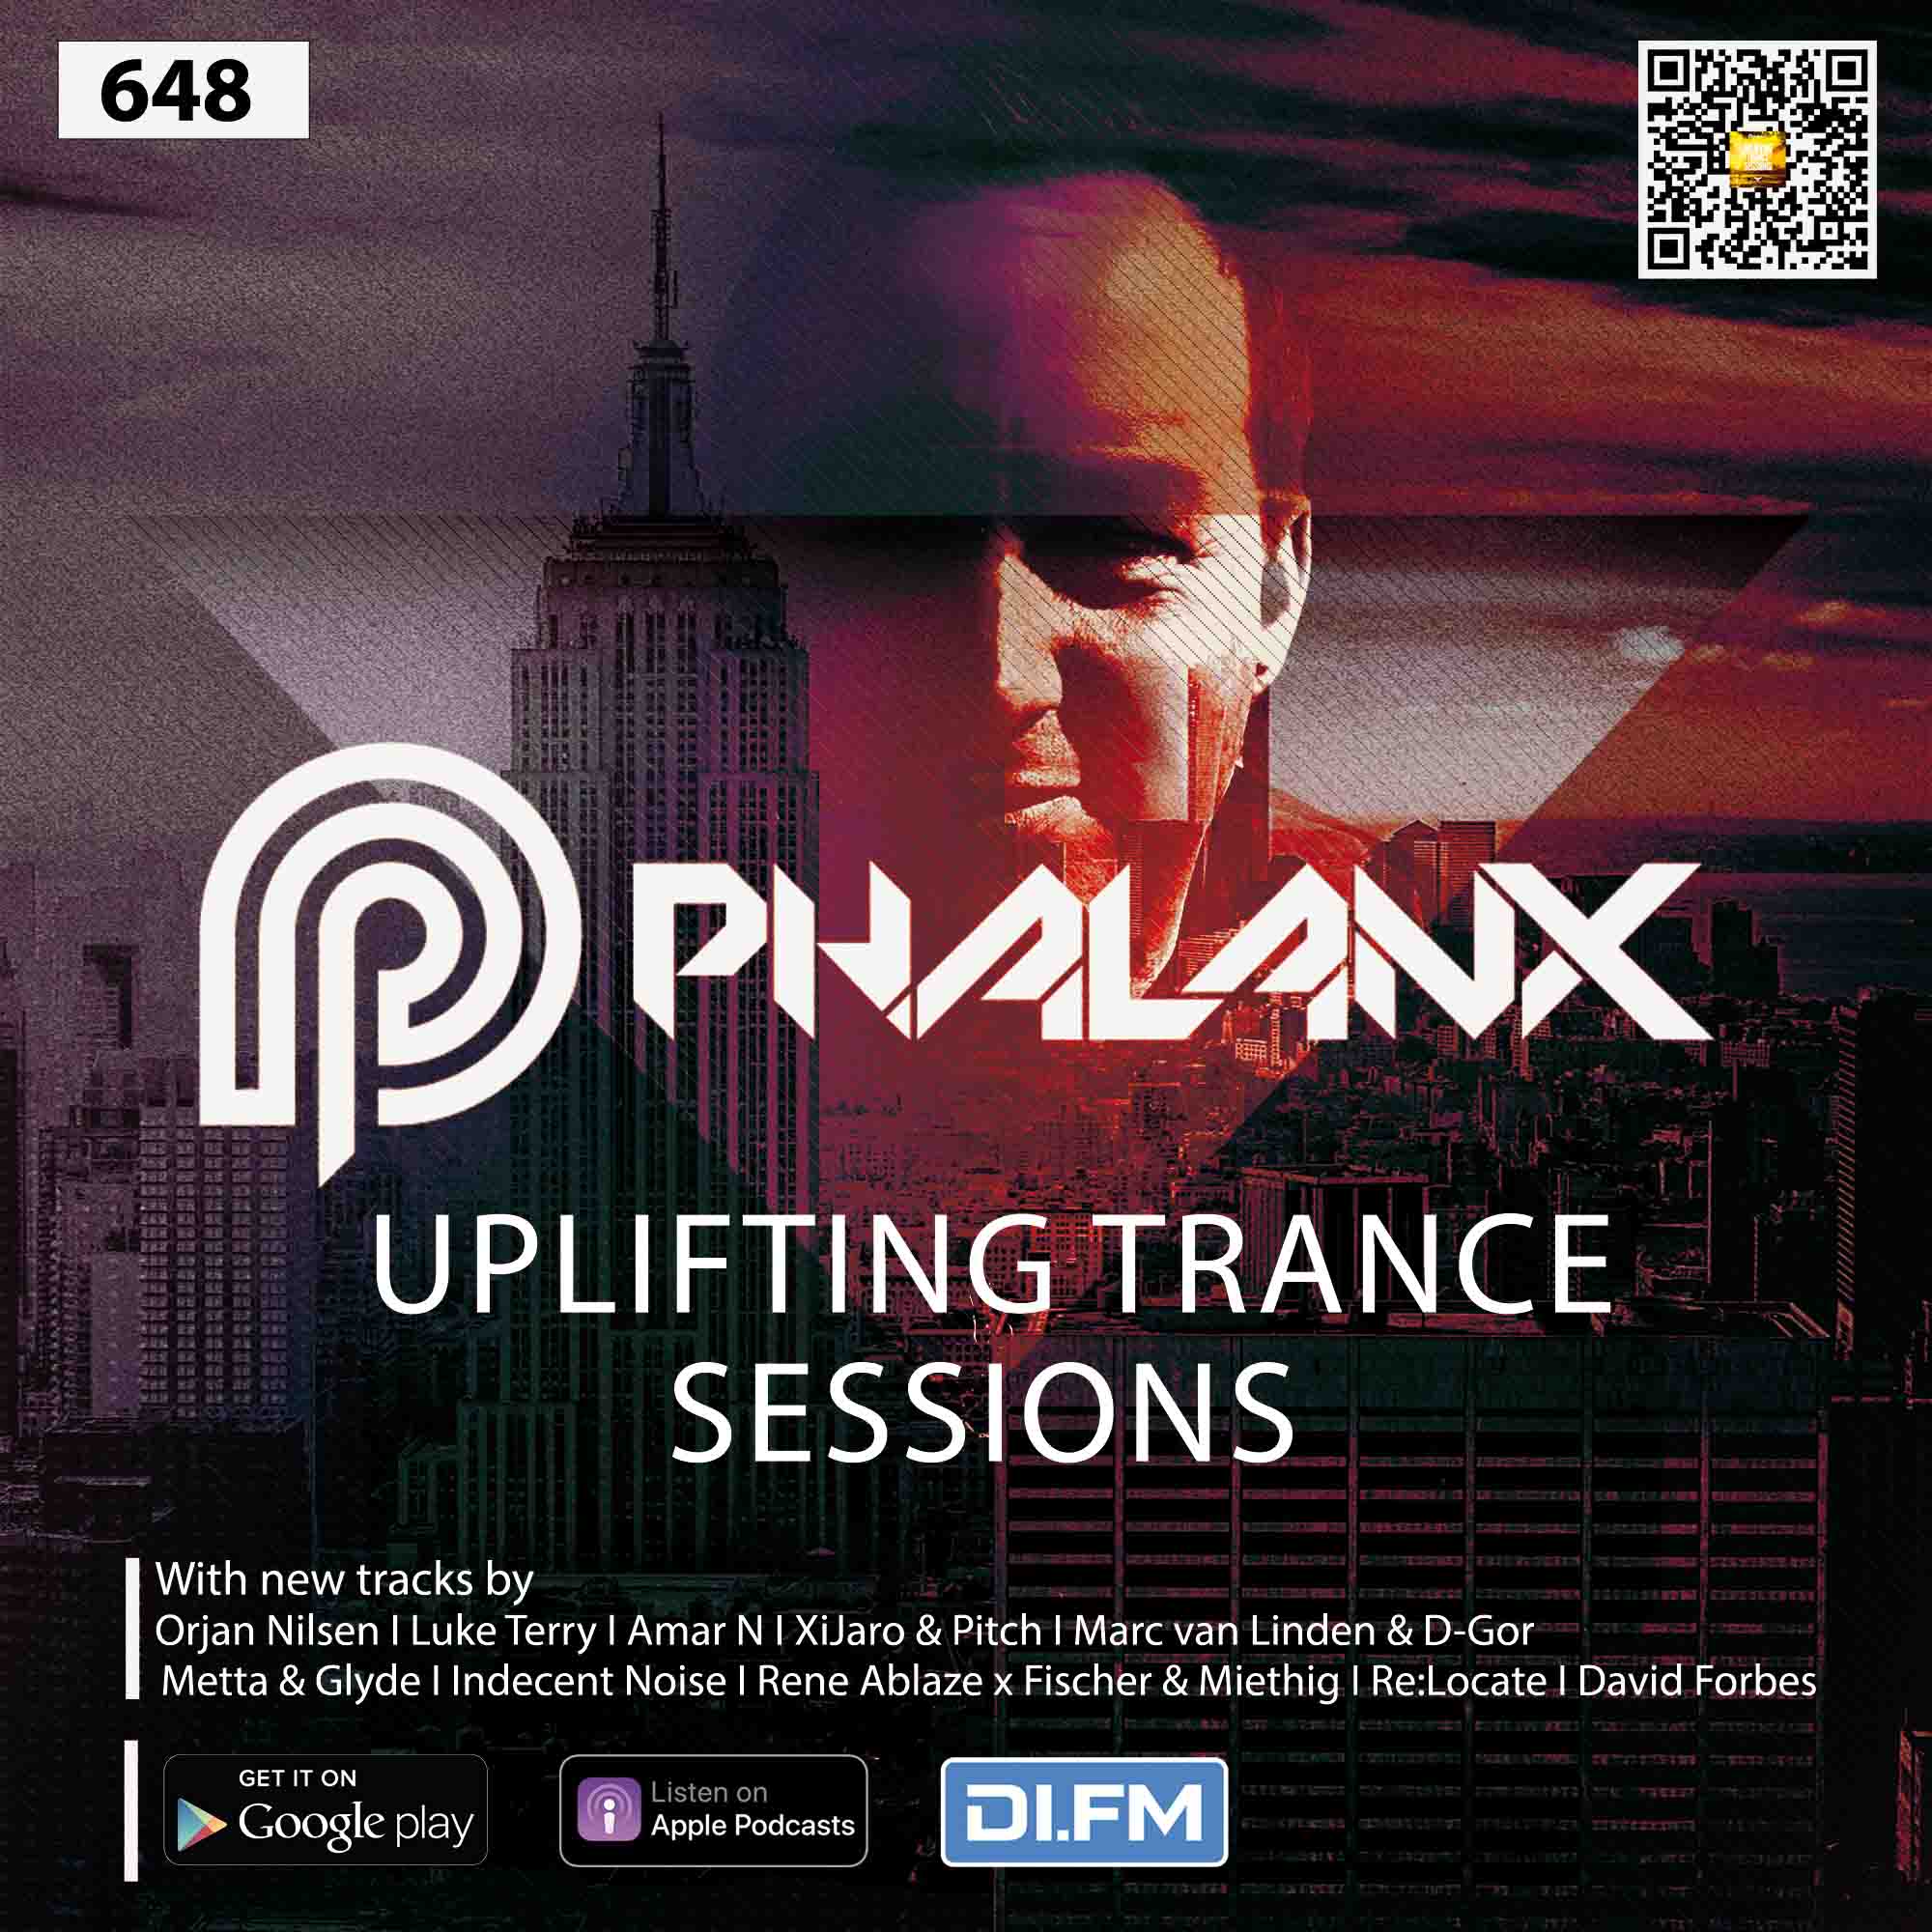 ⚡ Uplifting Trance Sessions EP. 648 with DJ Phalanx